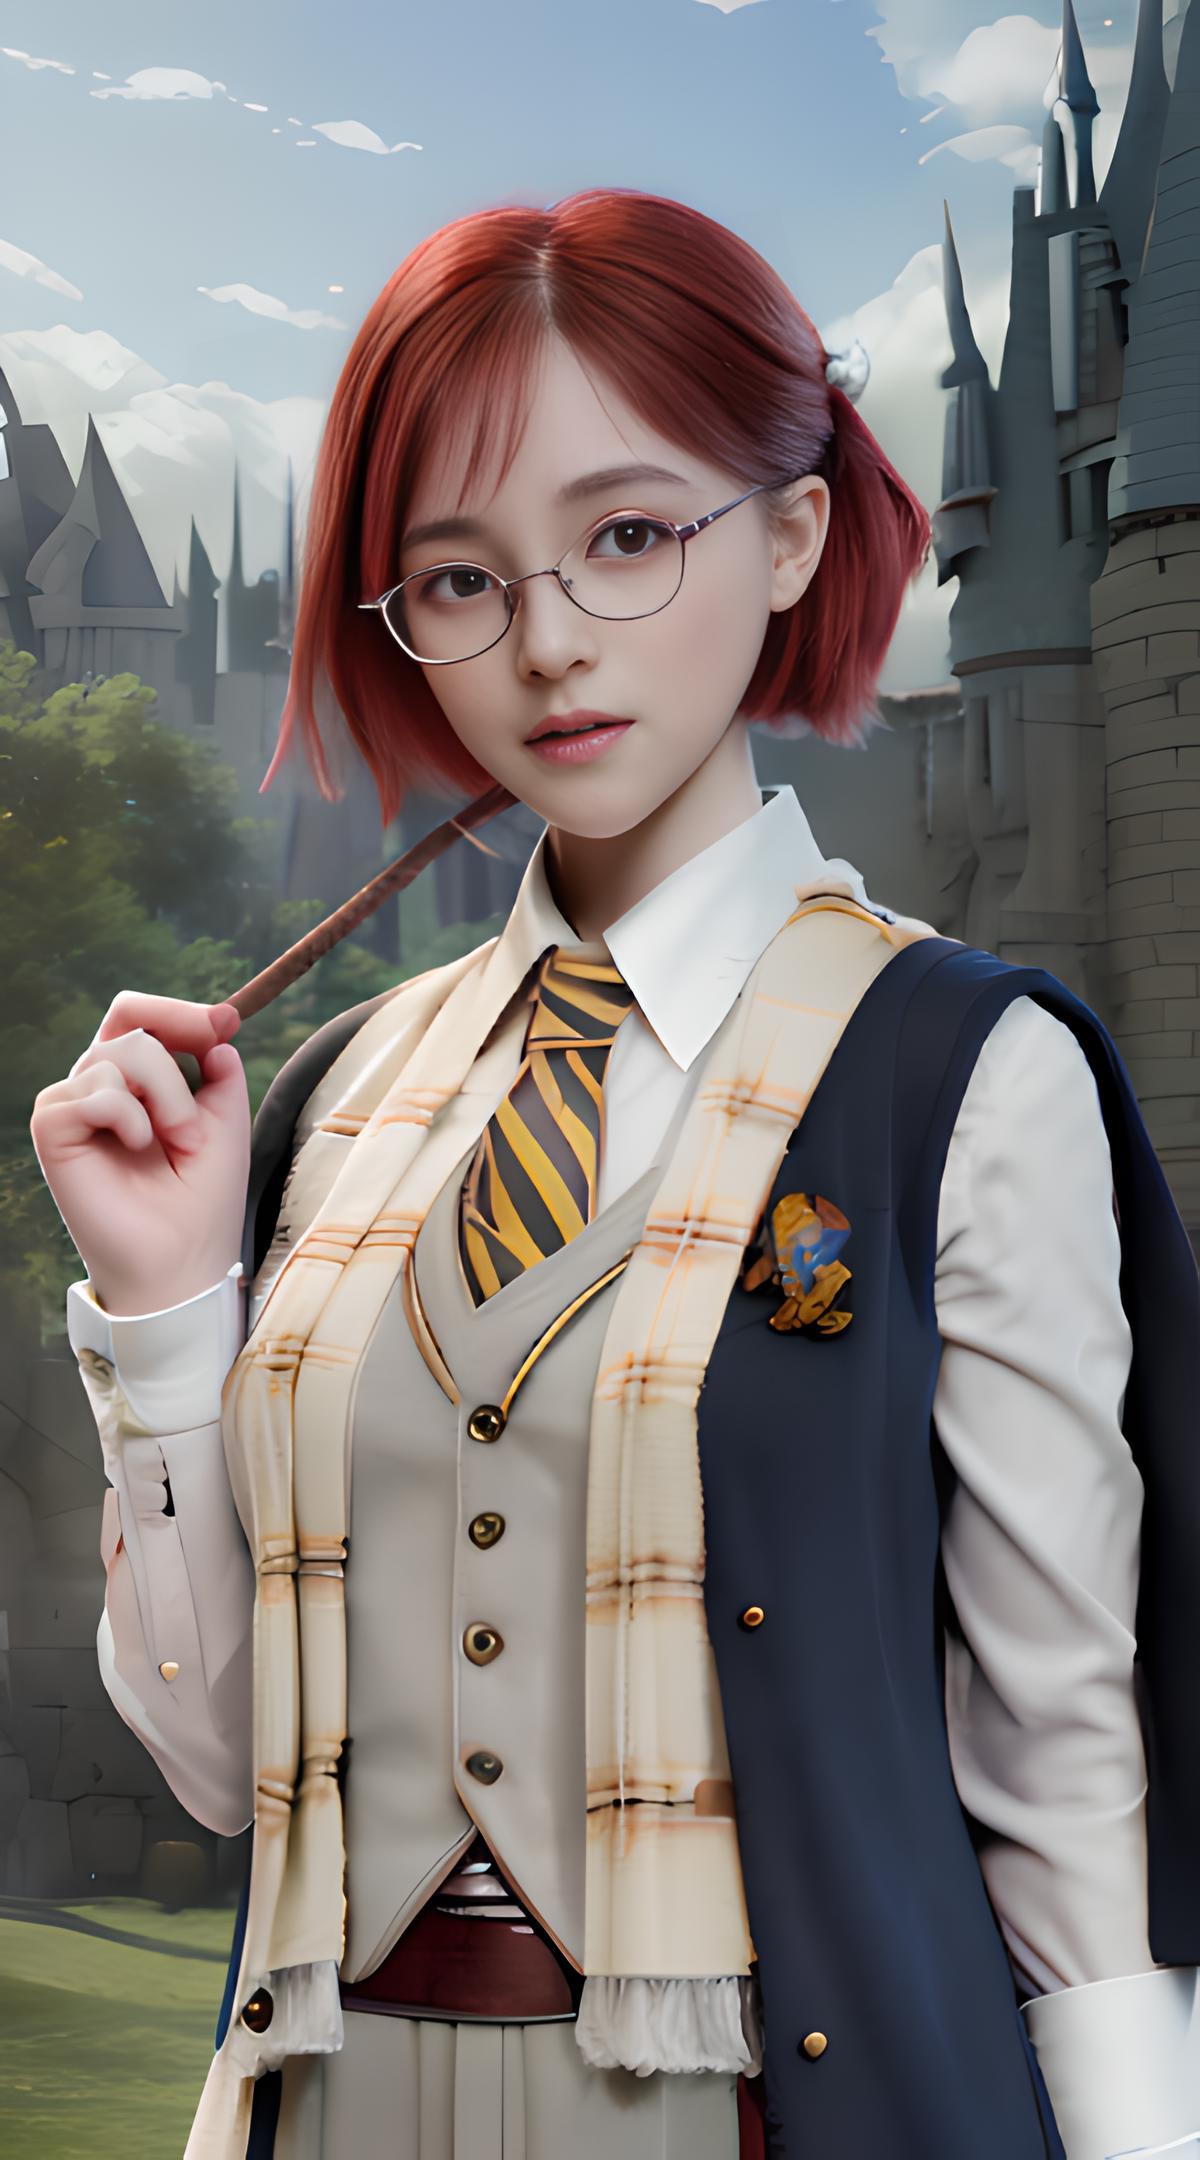 Hogwarts Uniform Lora image by 5242